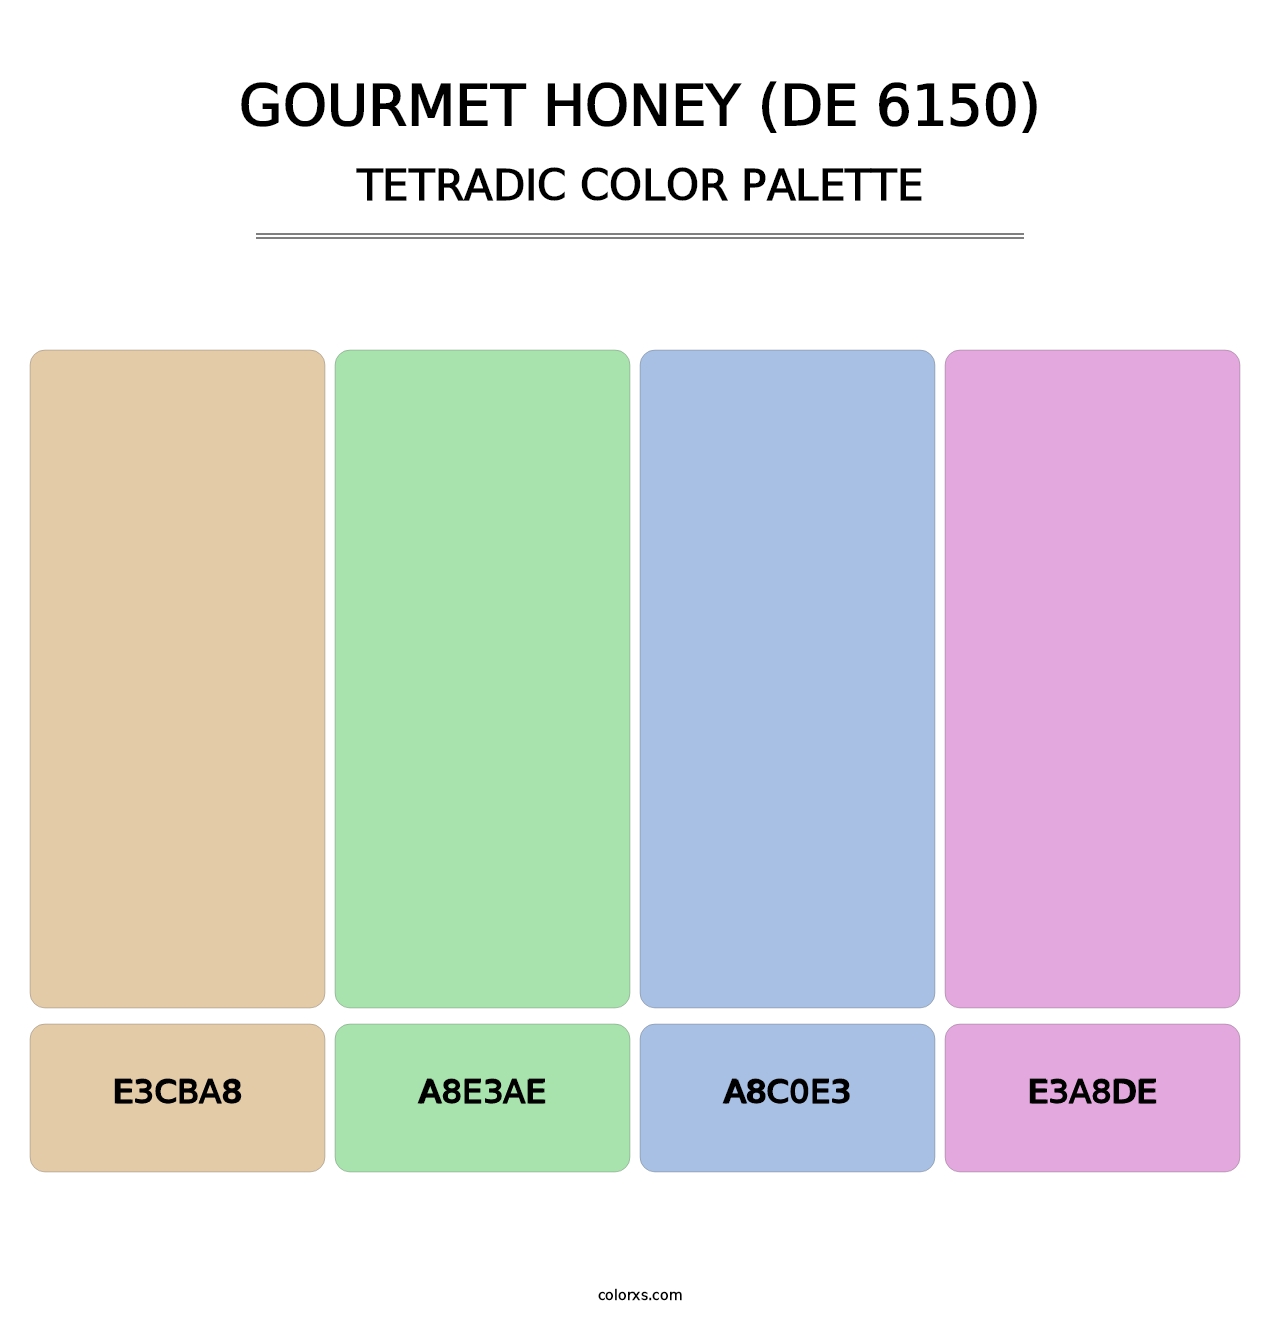 Gourmet Honey (DE 6150) - Tetradic Color Palette